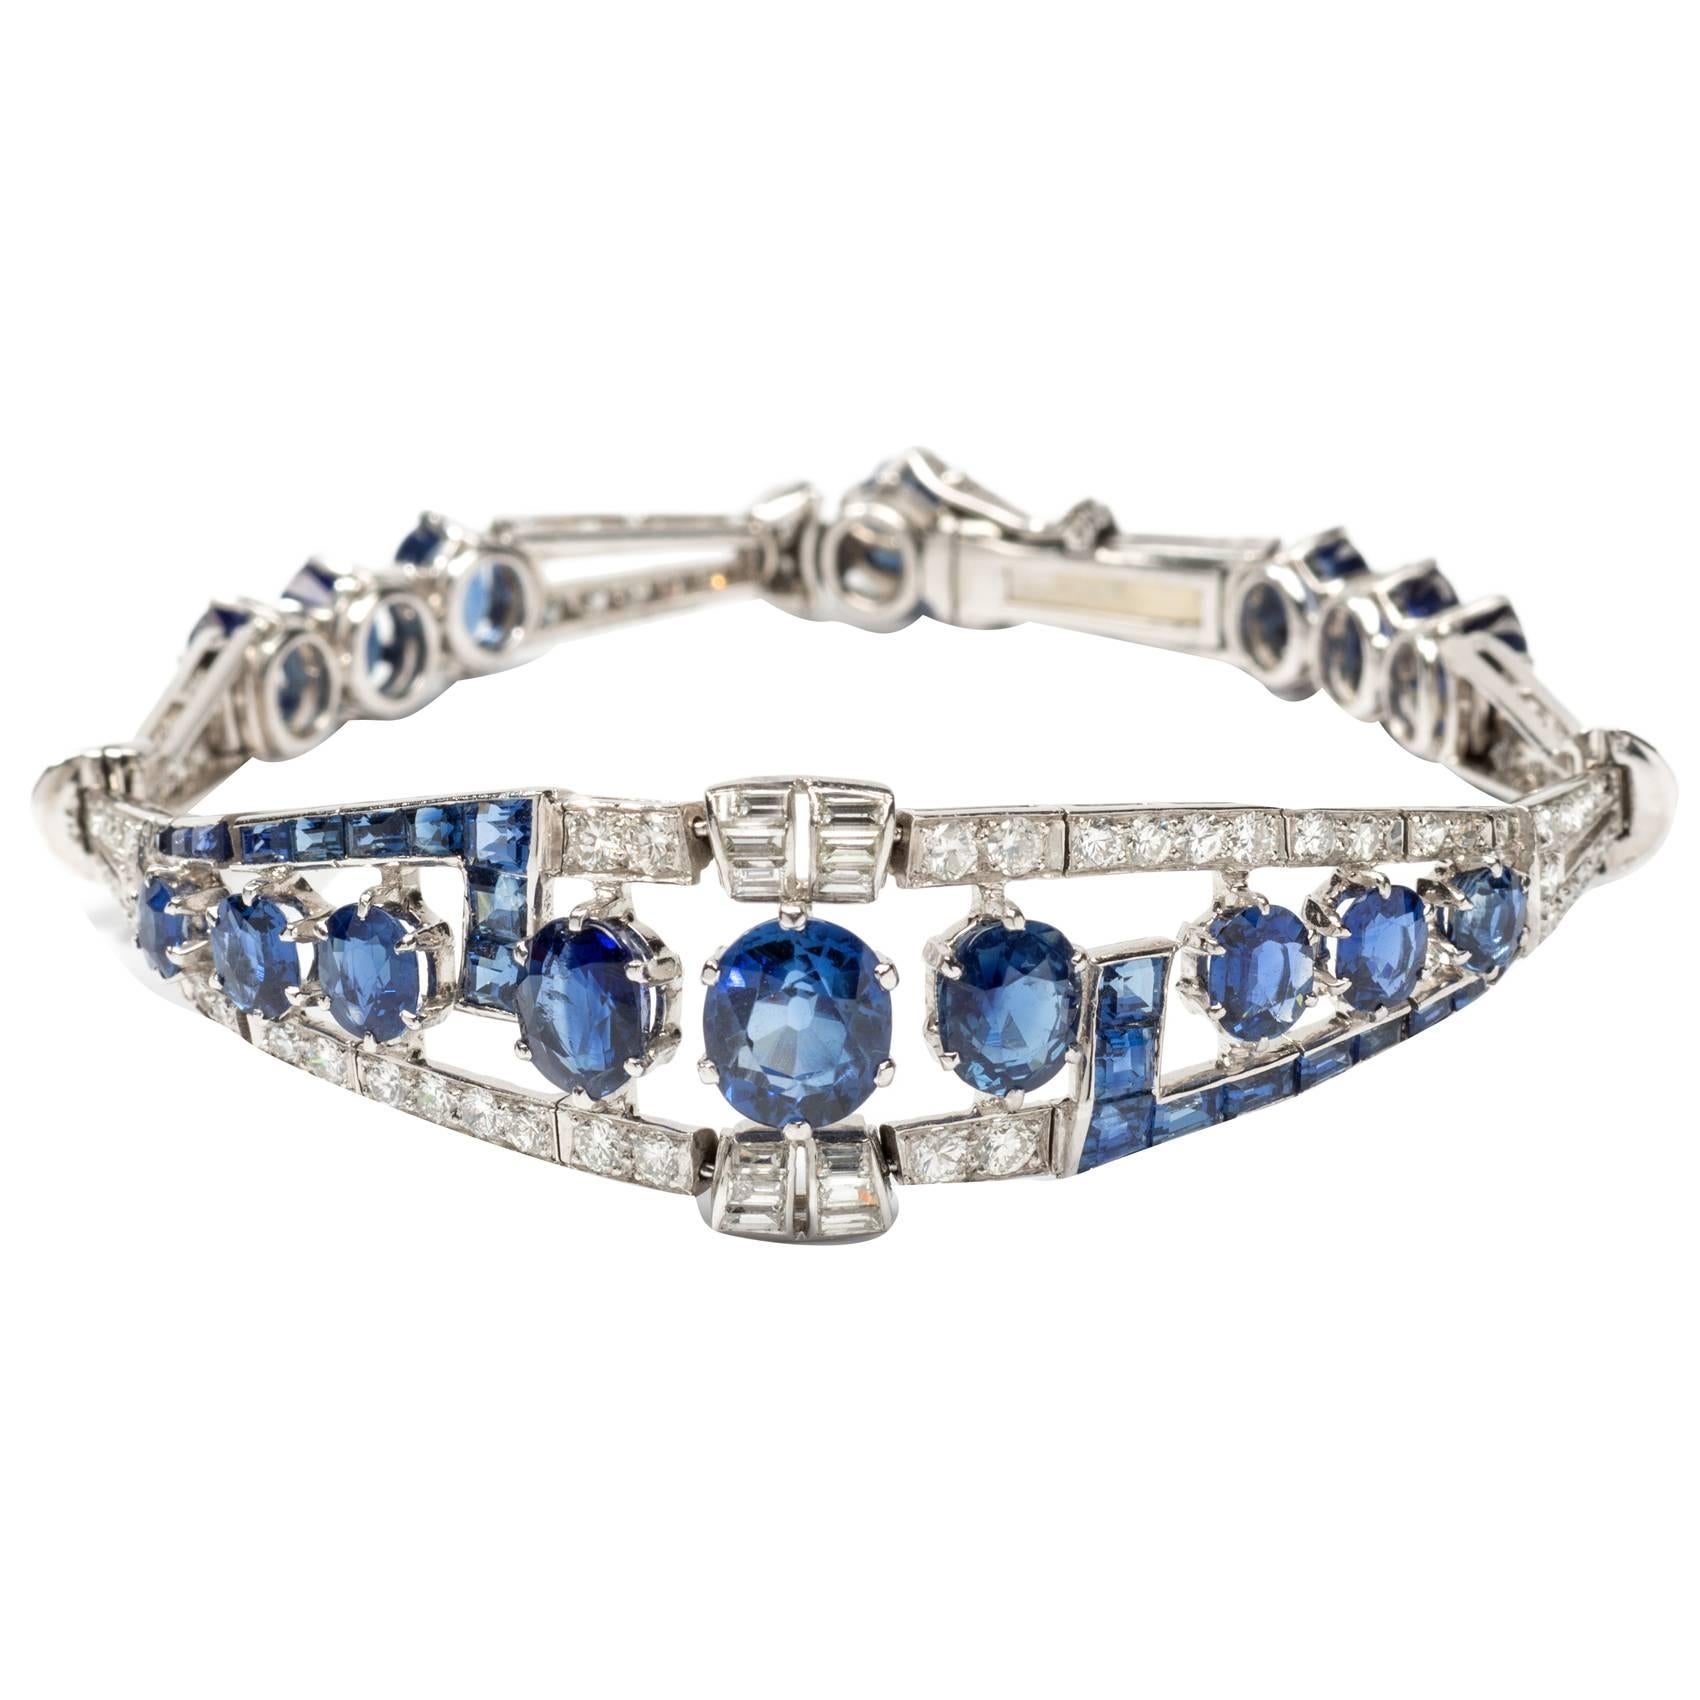 Art Deco Sapphire Diamond Bracelet in Platinum and White Gold For Sale